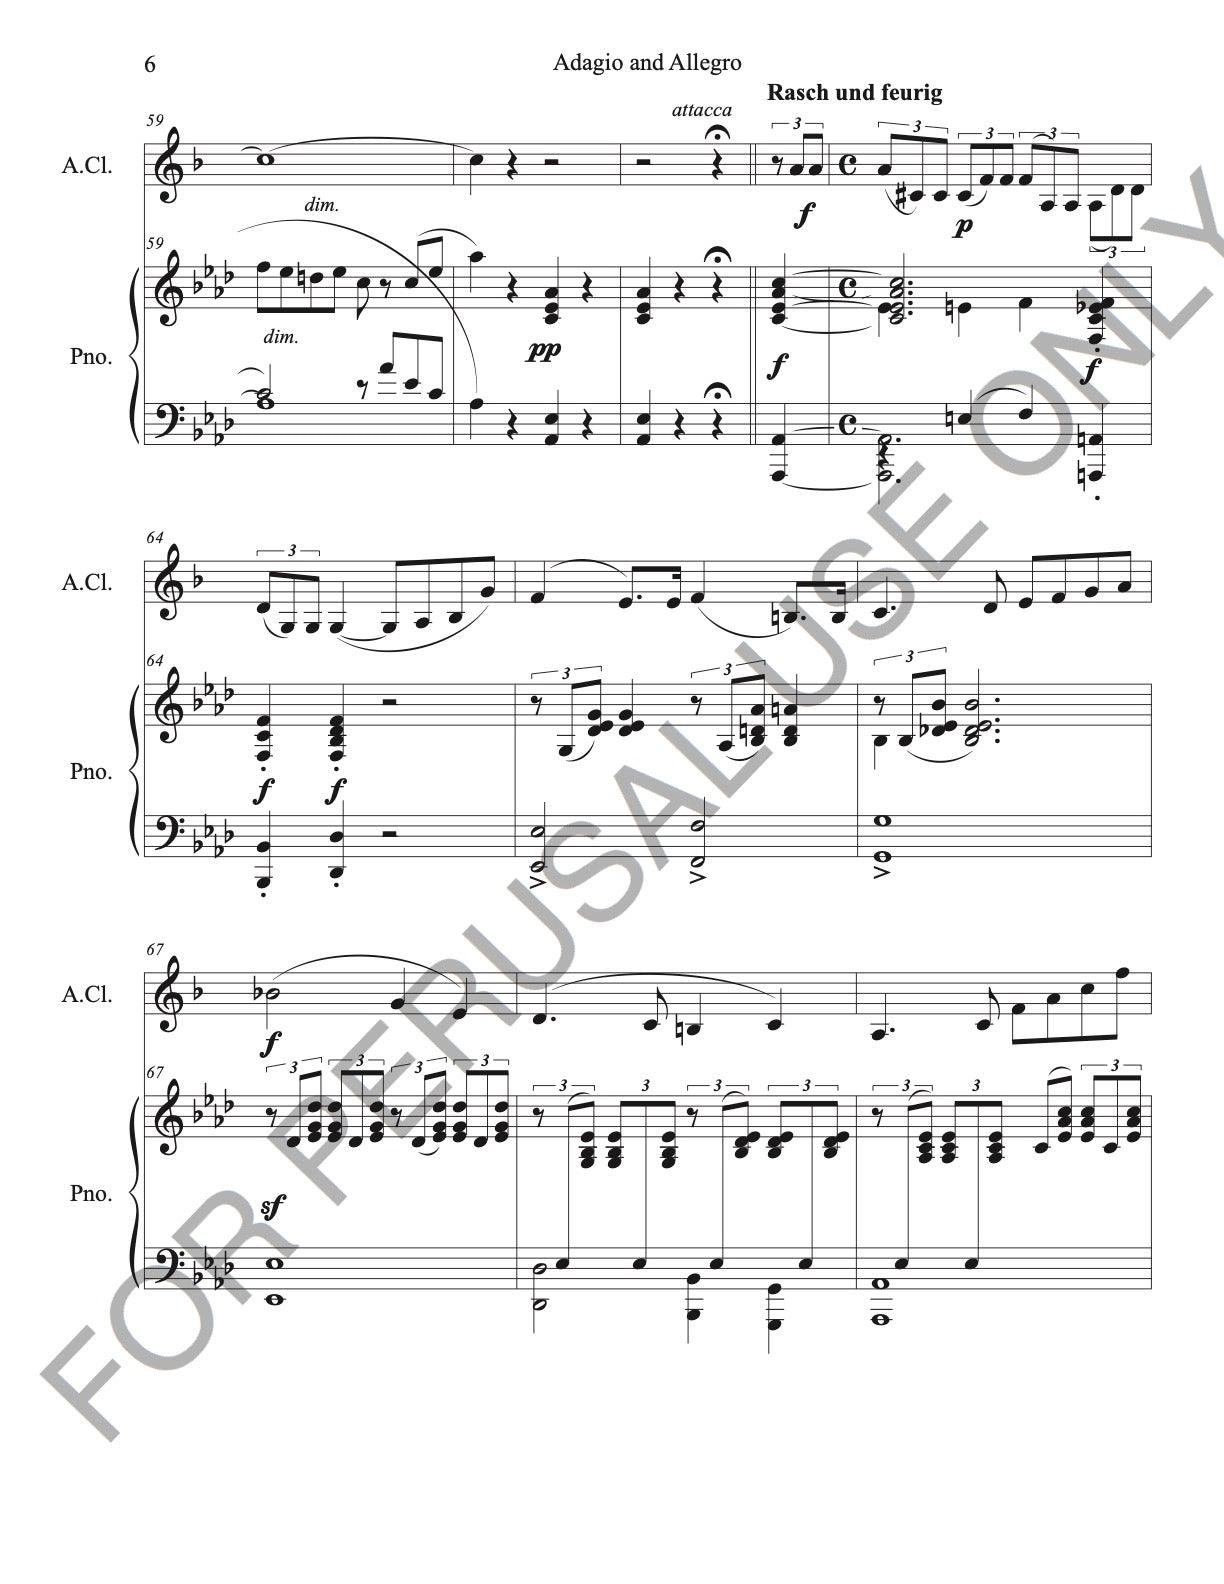 Alto Clarinet and Piano: Schumann's Adagio and Allegro Op. 70 - ChaipruckMekara